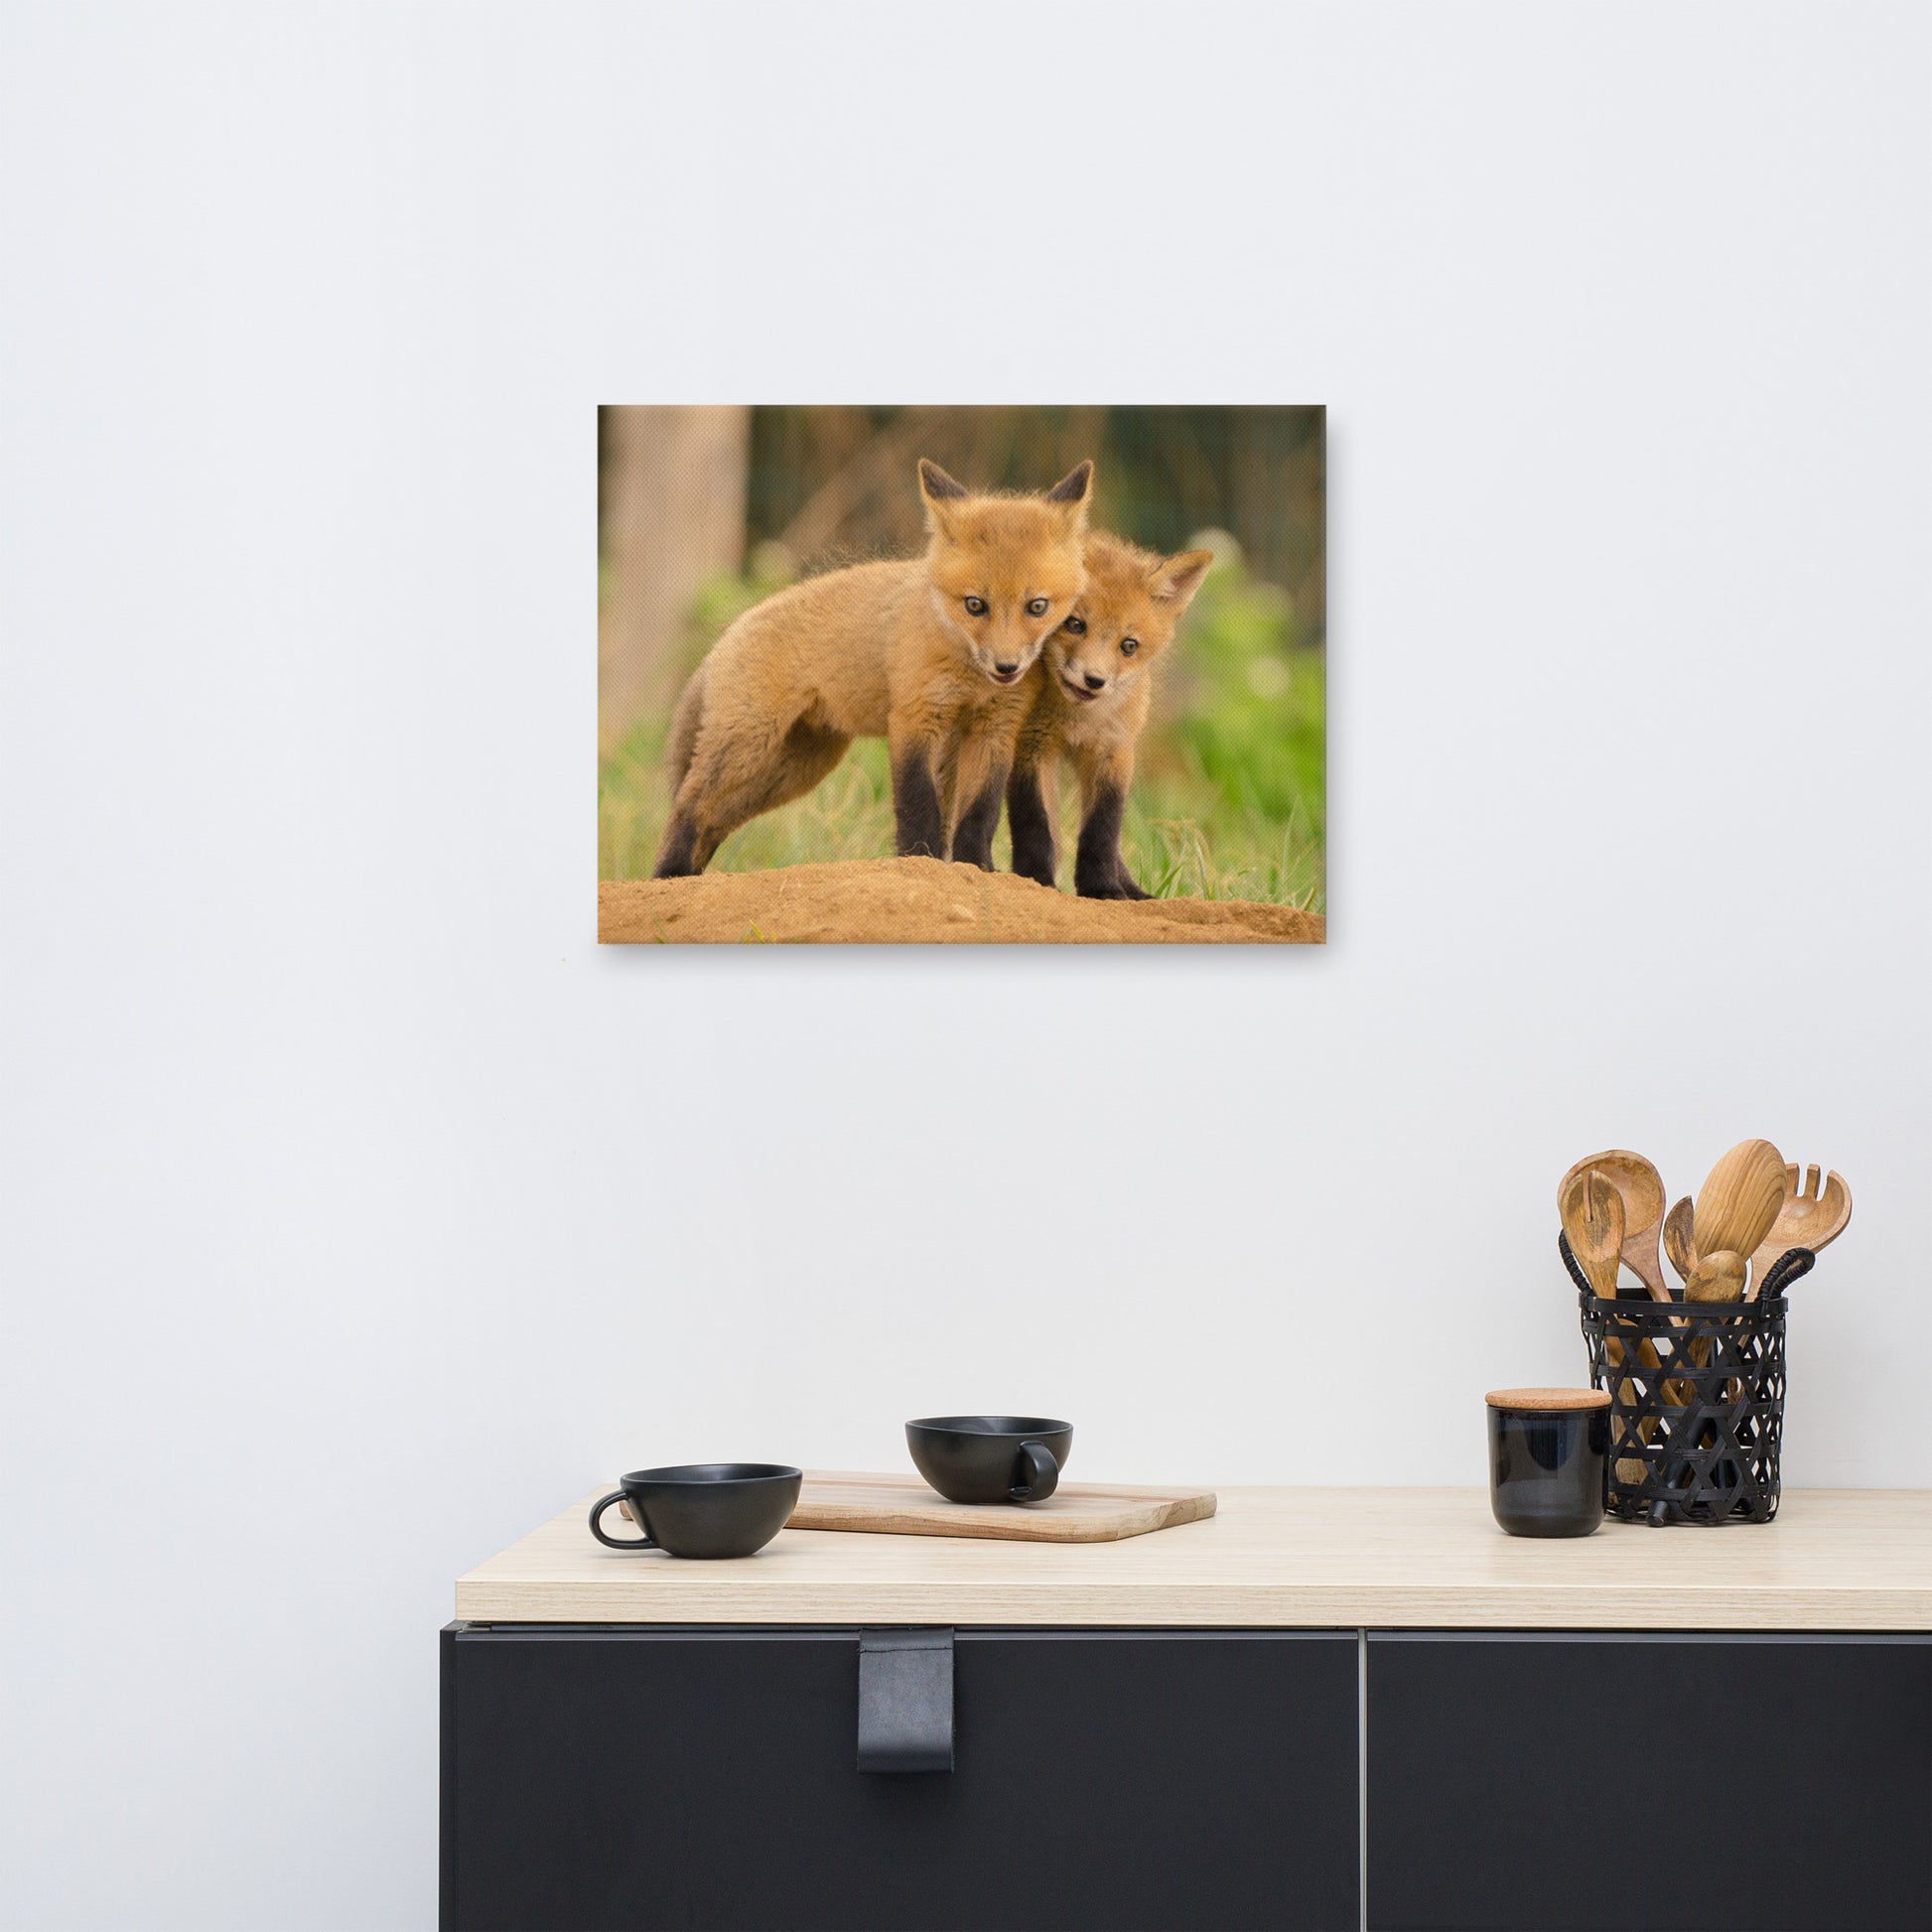 Cozy Room Art: Close to You Baby Fox Pups - Animal / Wildlife / Nature Photograph Wall Art Print- Artwork - Wall Decor